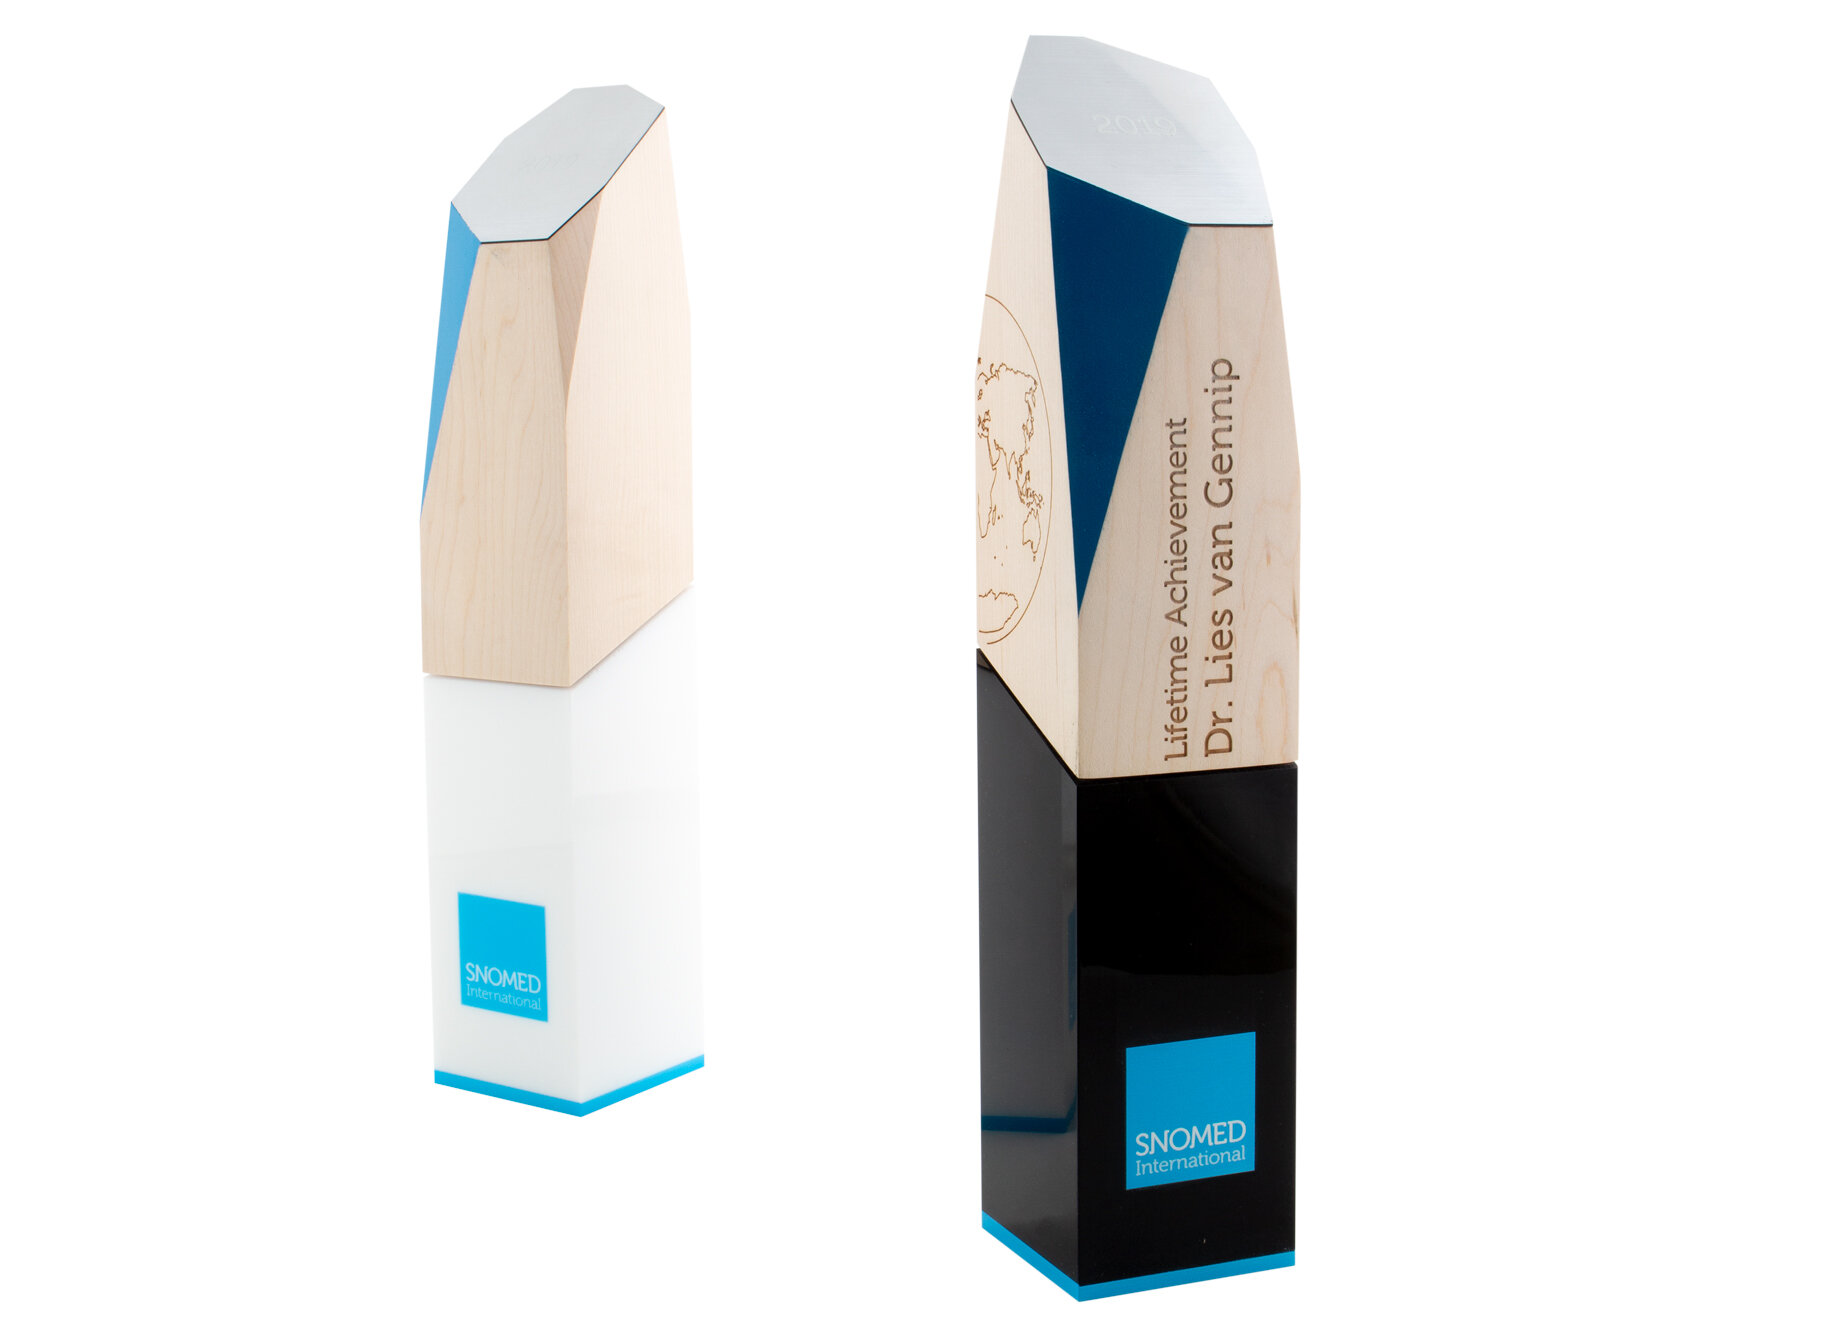 SNOMED International custom awards wood and acrylic laser engraved 2